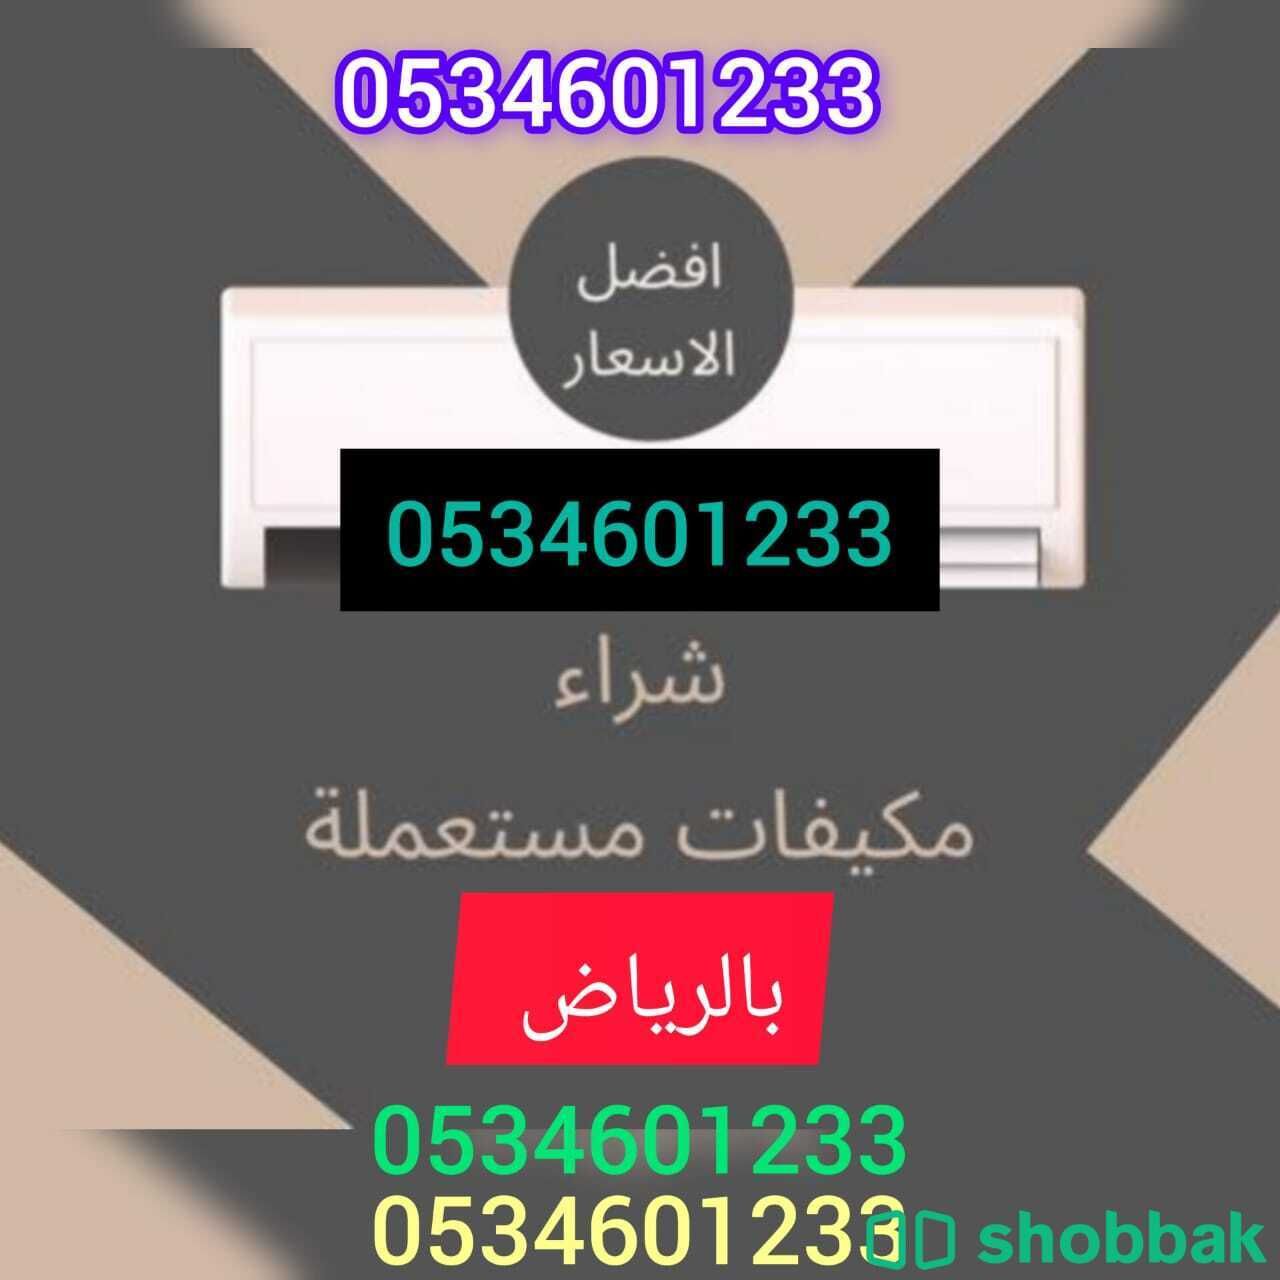 محلات شراء اثاث مستعمل شرق الرياض 0506372280 Shobbak Saudi Arabia